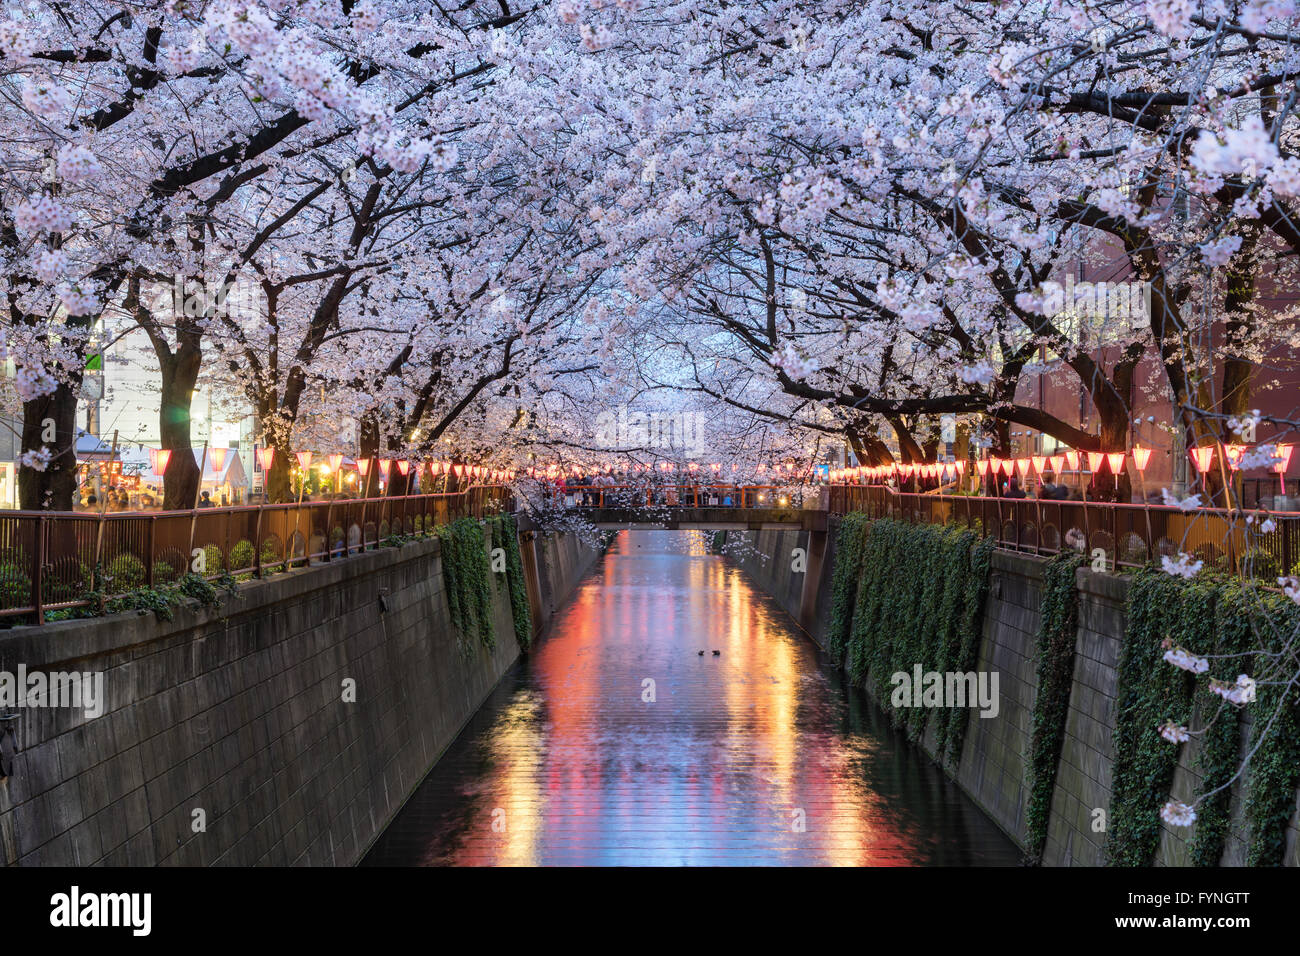 Cherry blossom festival at Nakameguro, Tokyo, Japan Stock Photo